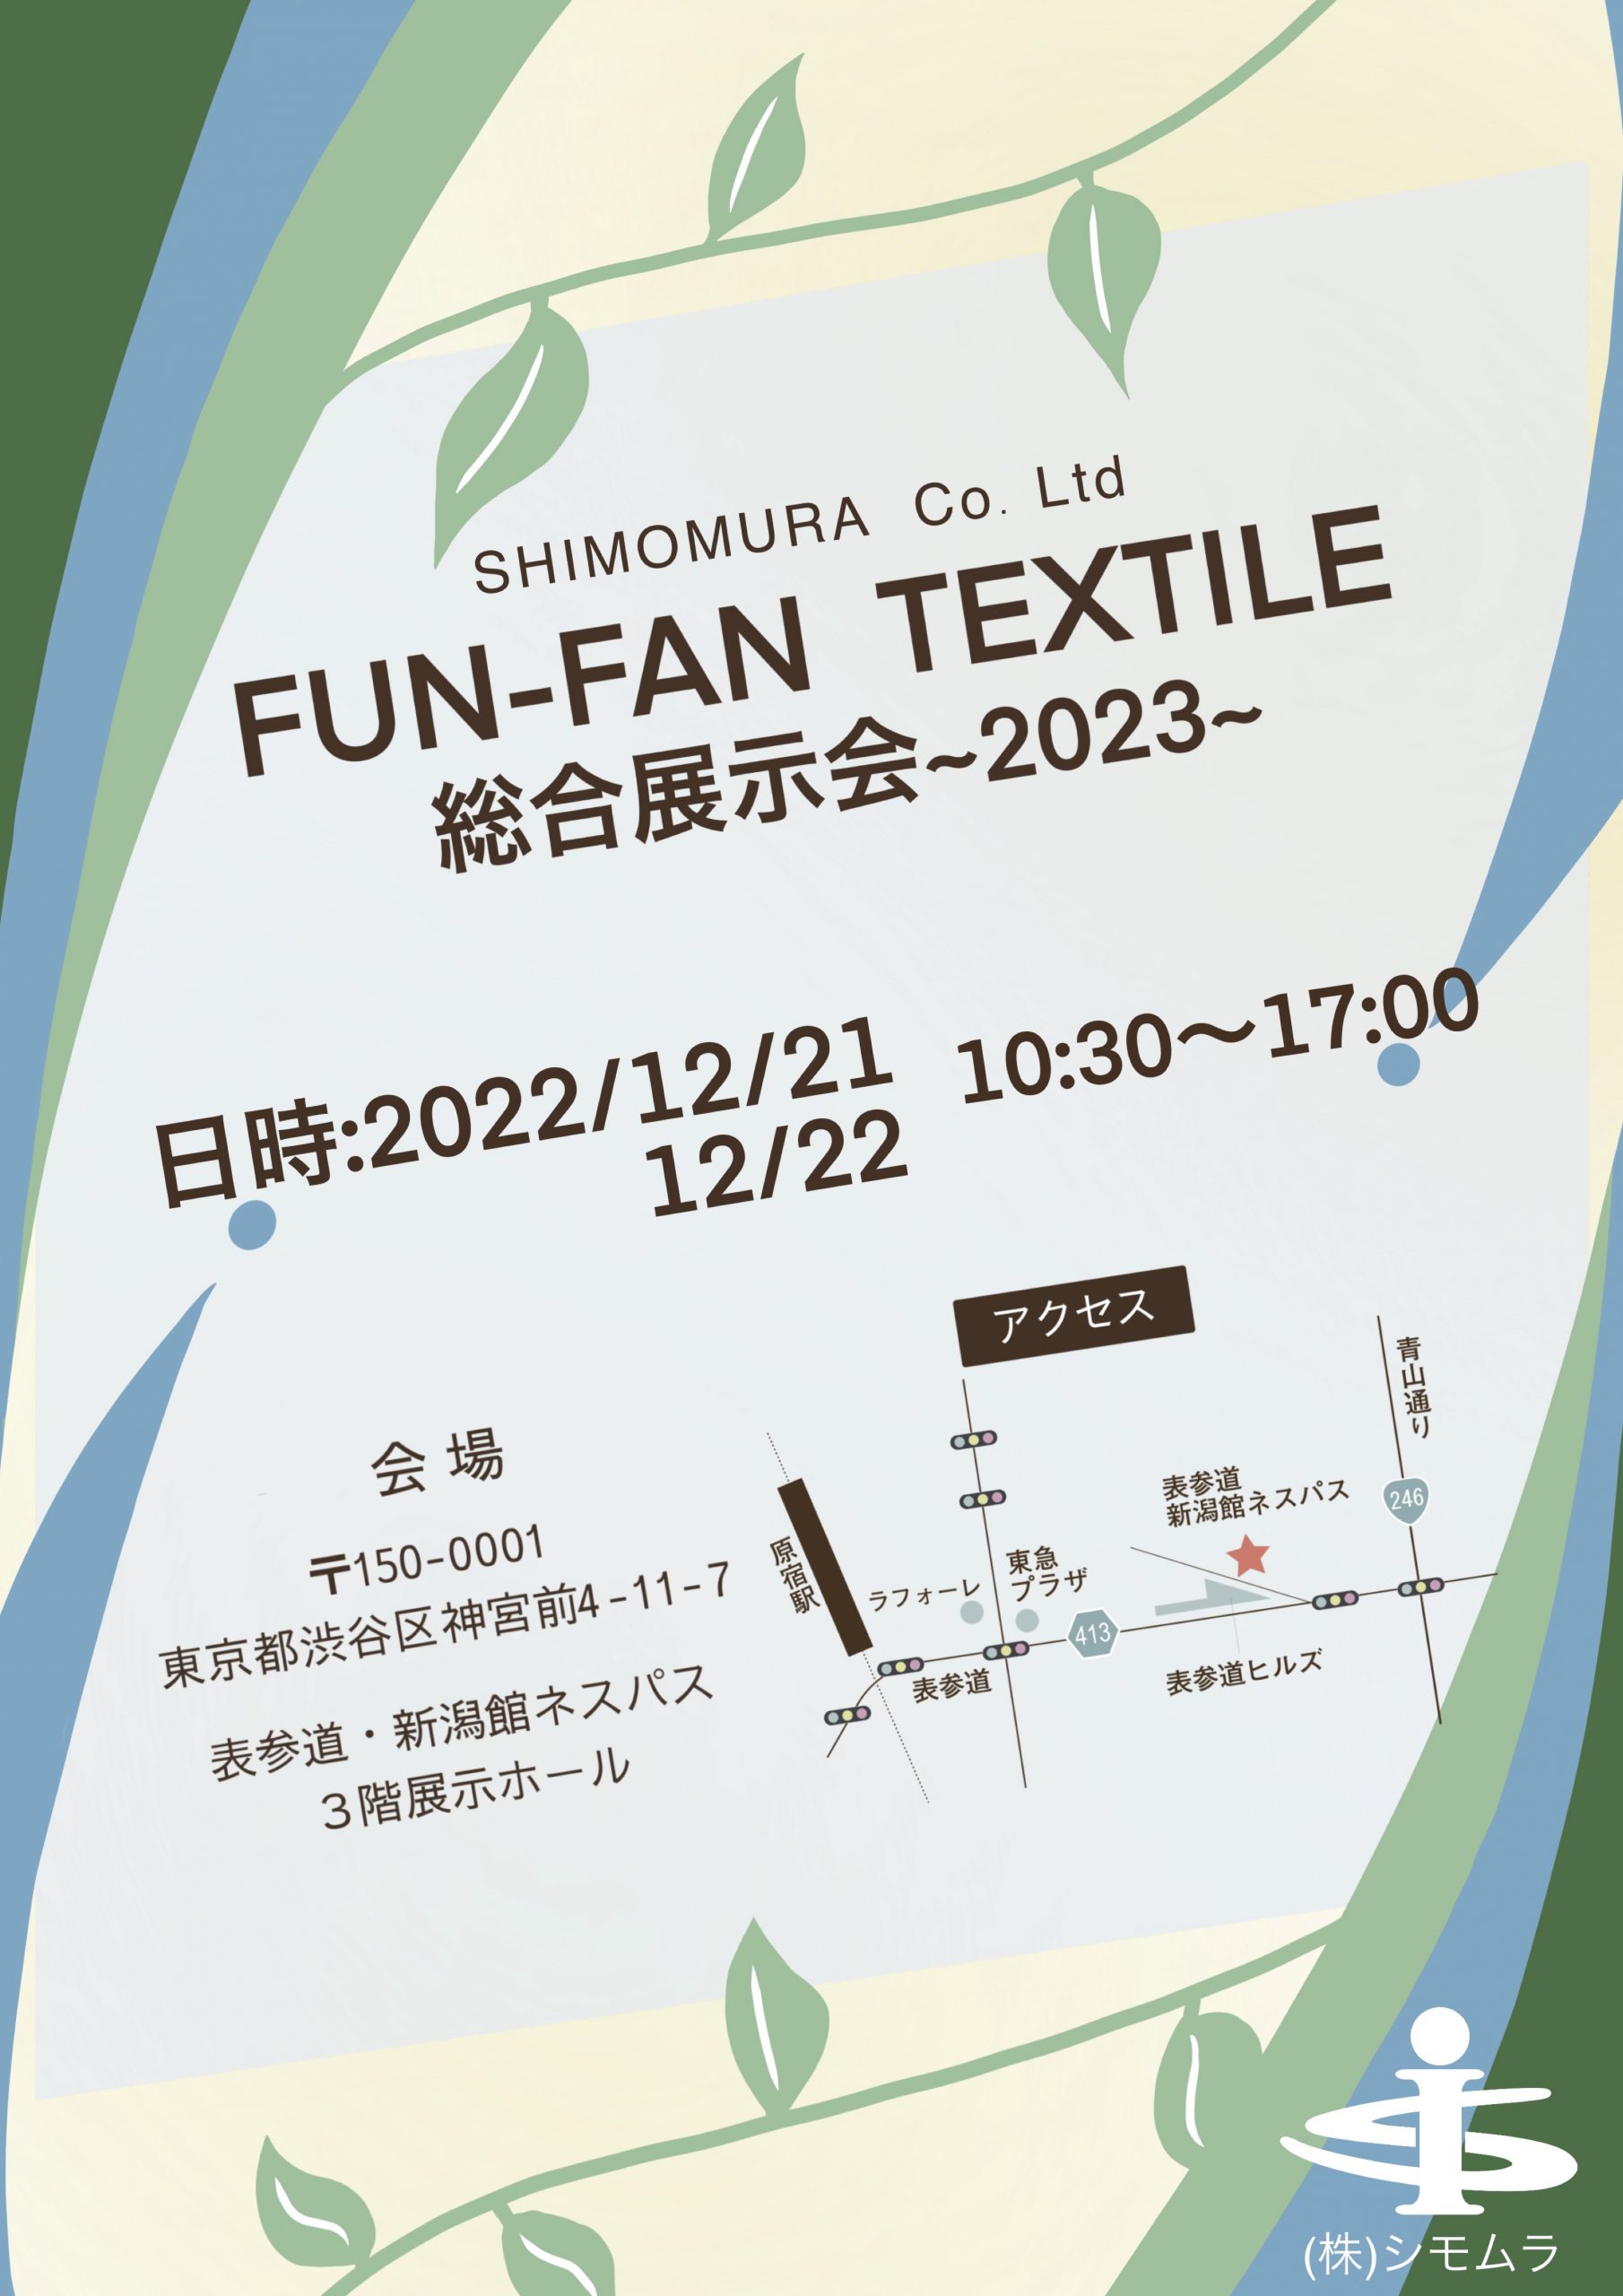 【FUN-FAN TEXTILE 総合展示会 ~2023~】開催のお知らせ